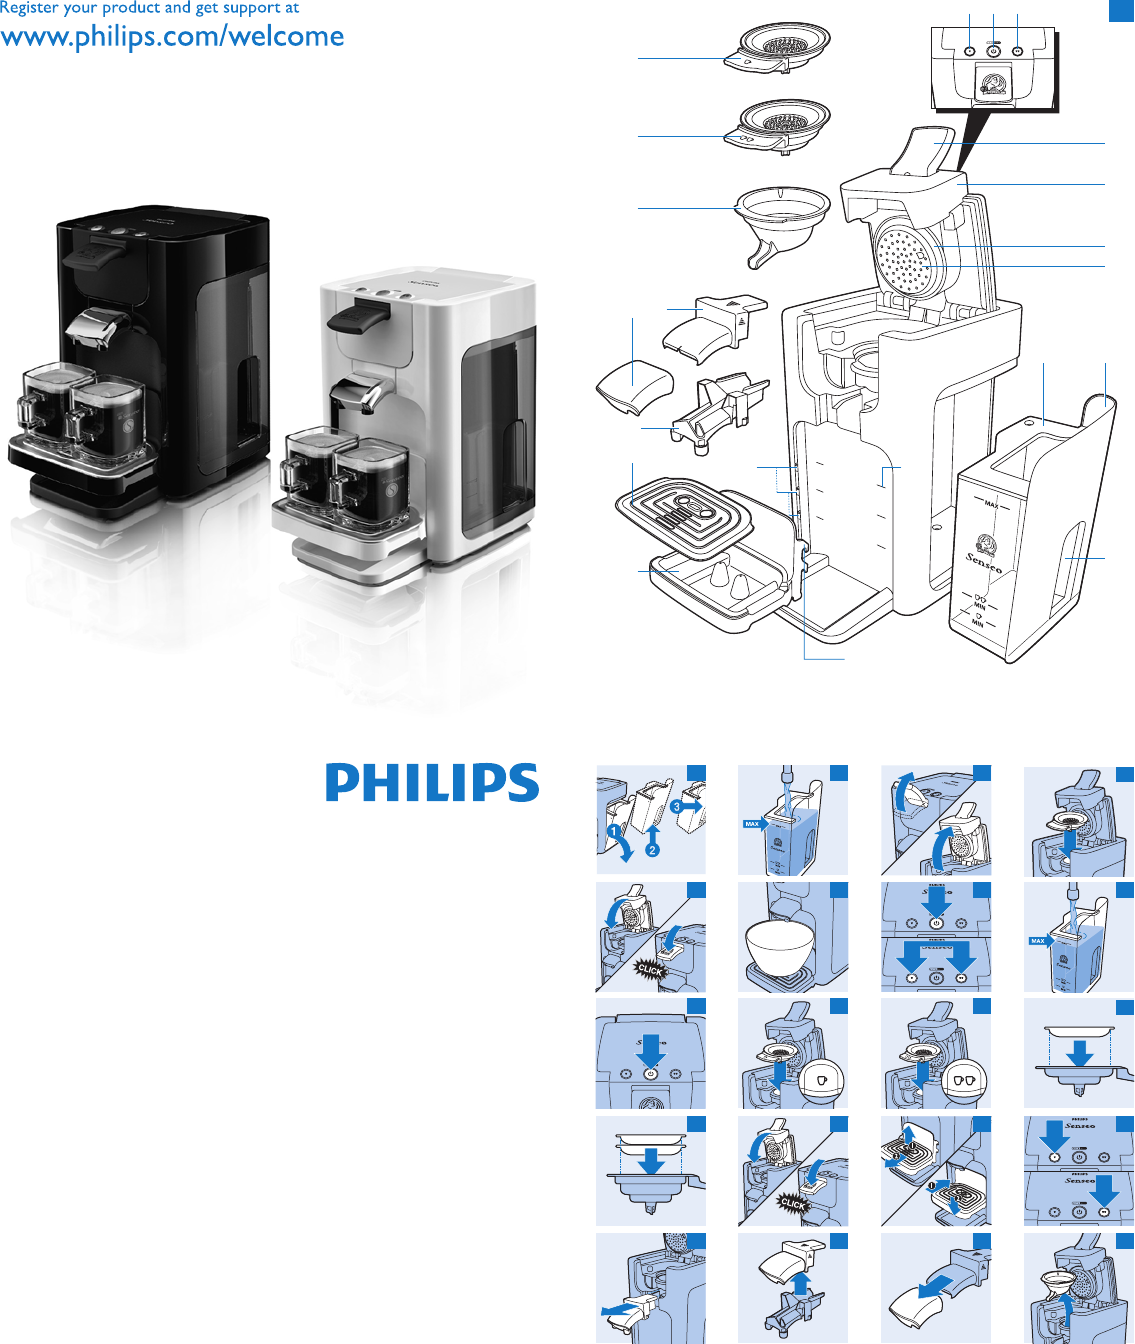 Philips Senseo HD 7860 (pagina 1 van 5)